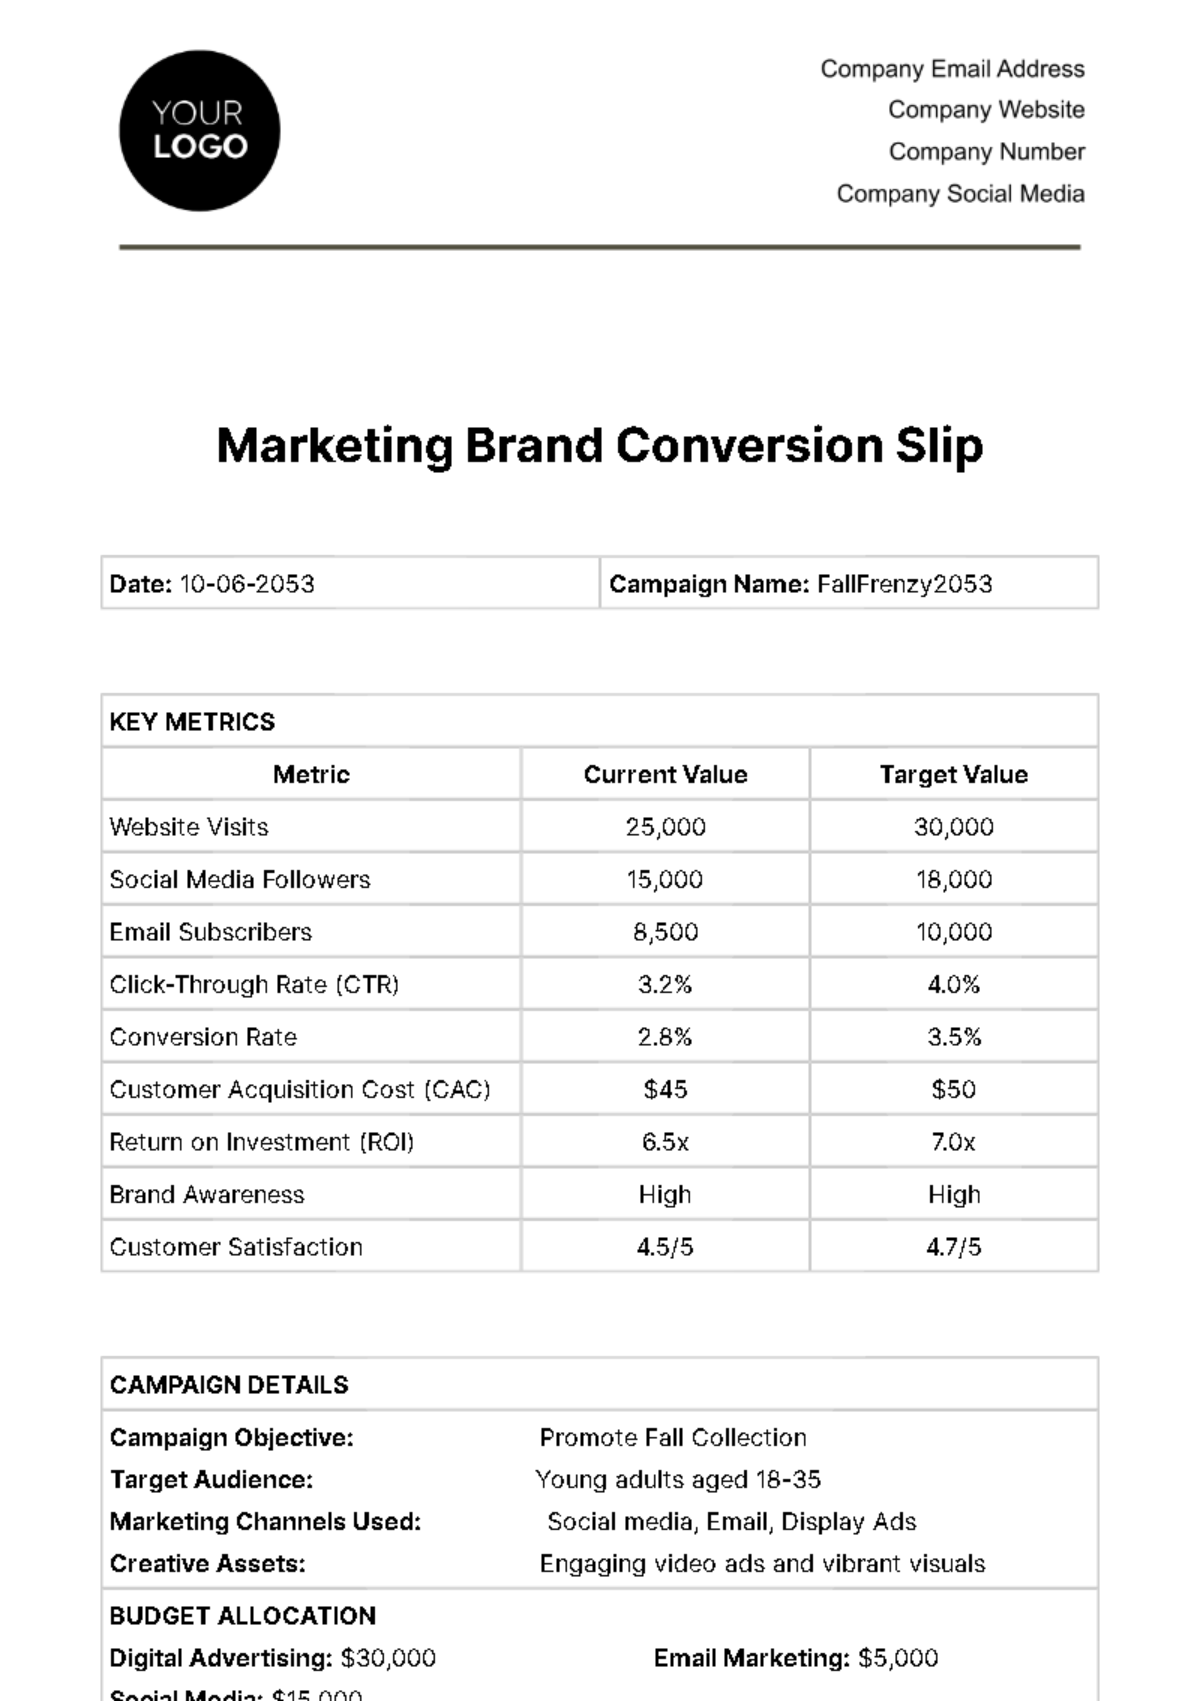 Free Marketing Brand Conversion Slip Template